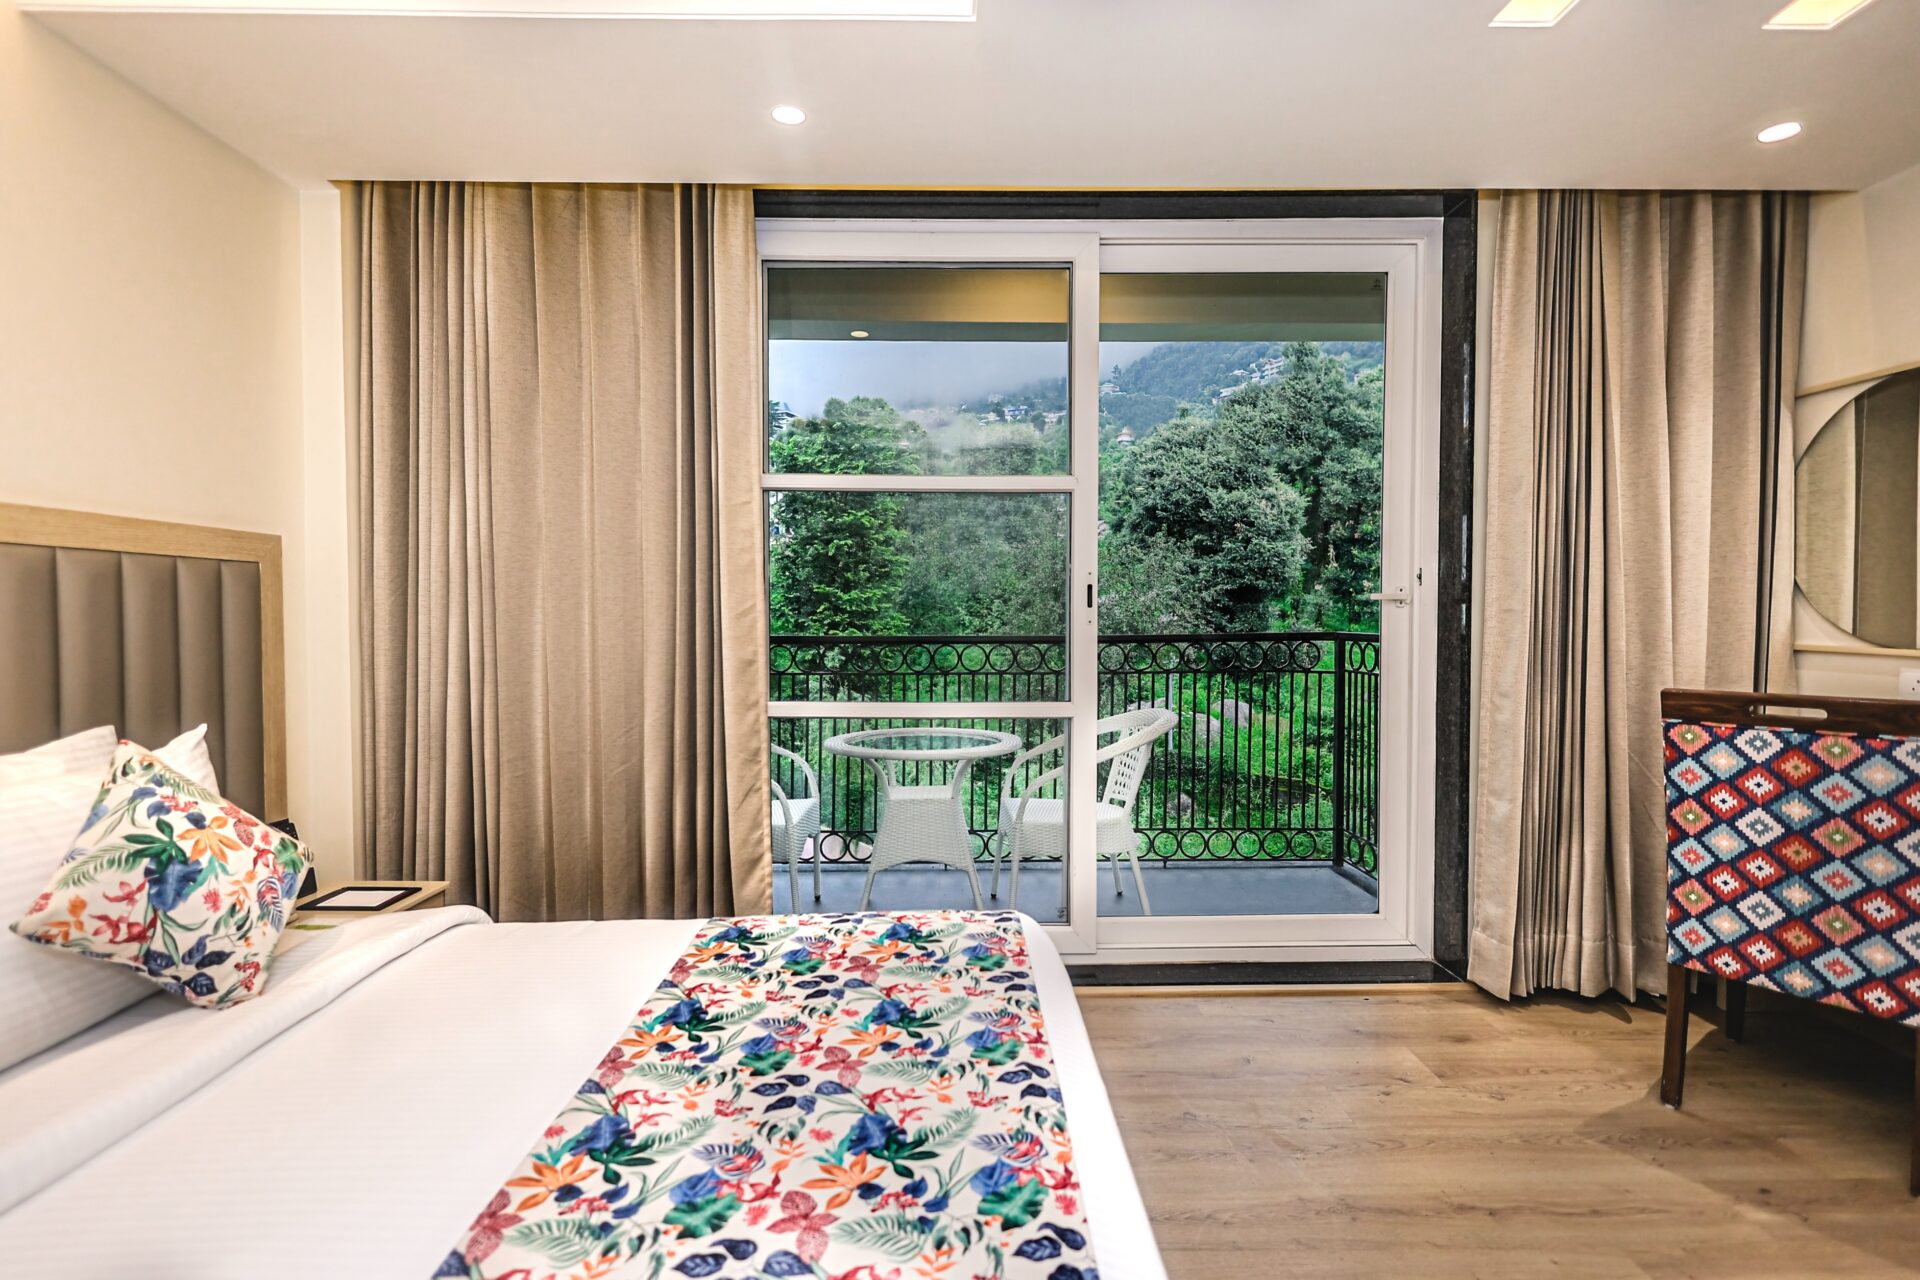 Royal Orchid & Regenta Hotels launches its property Regenta Inn Luxinna, Bhagsung